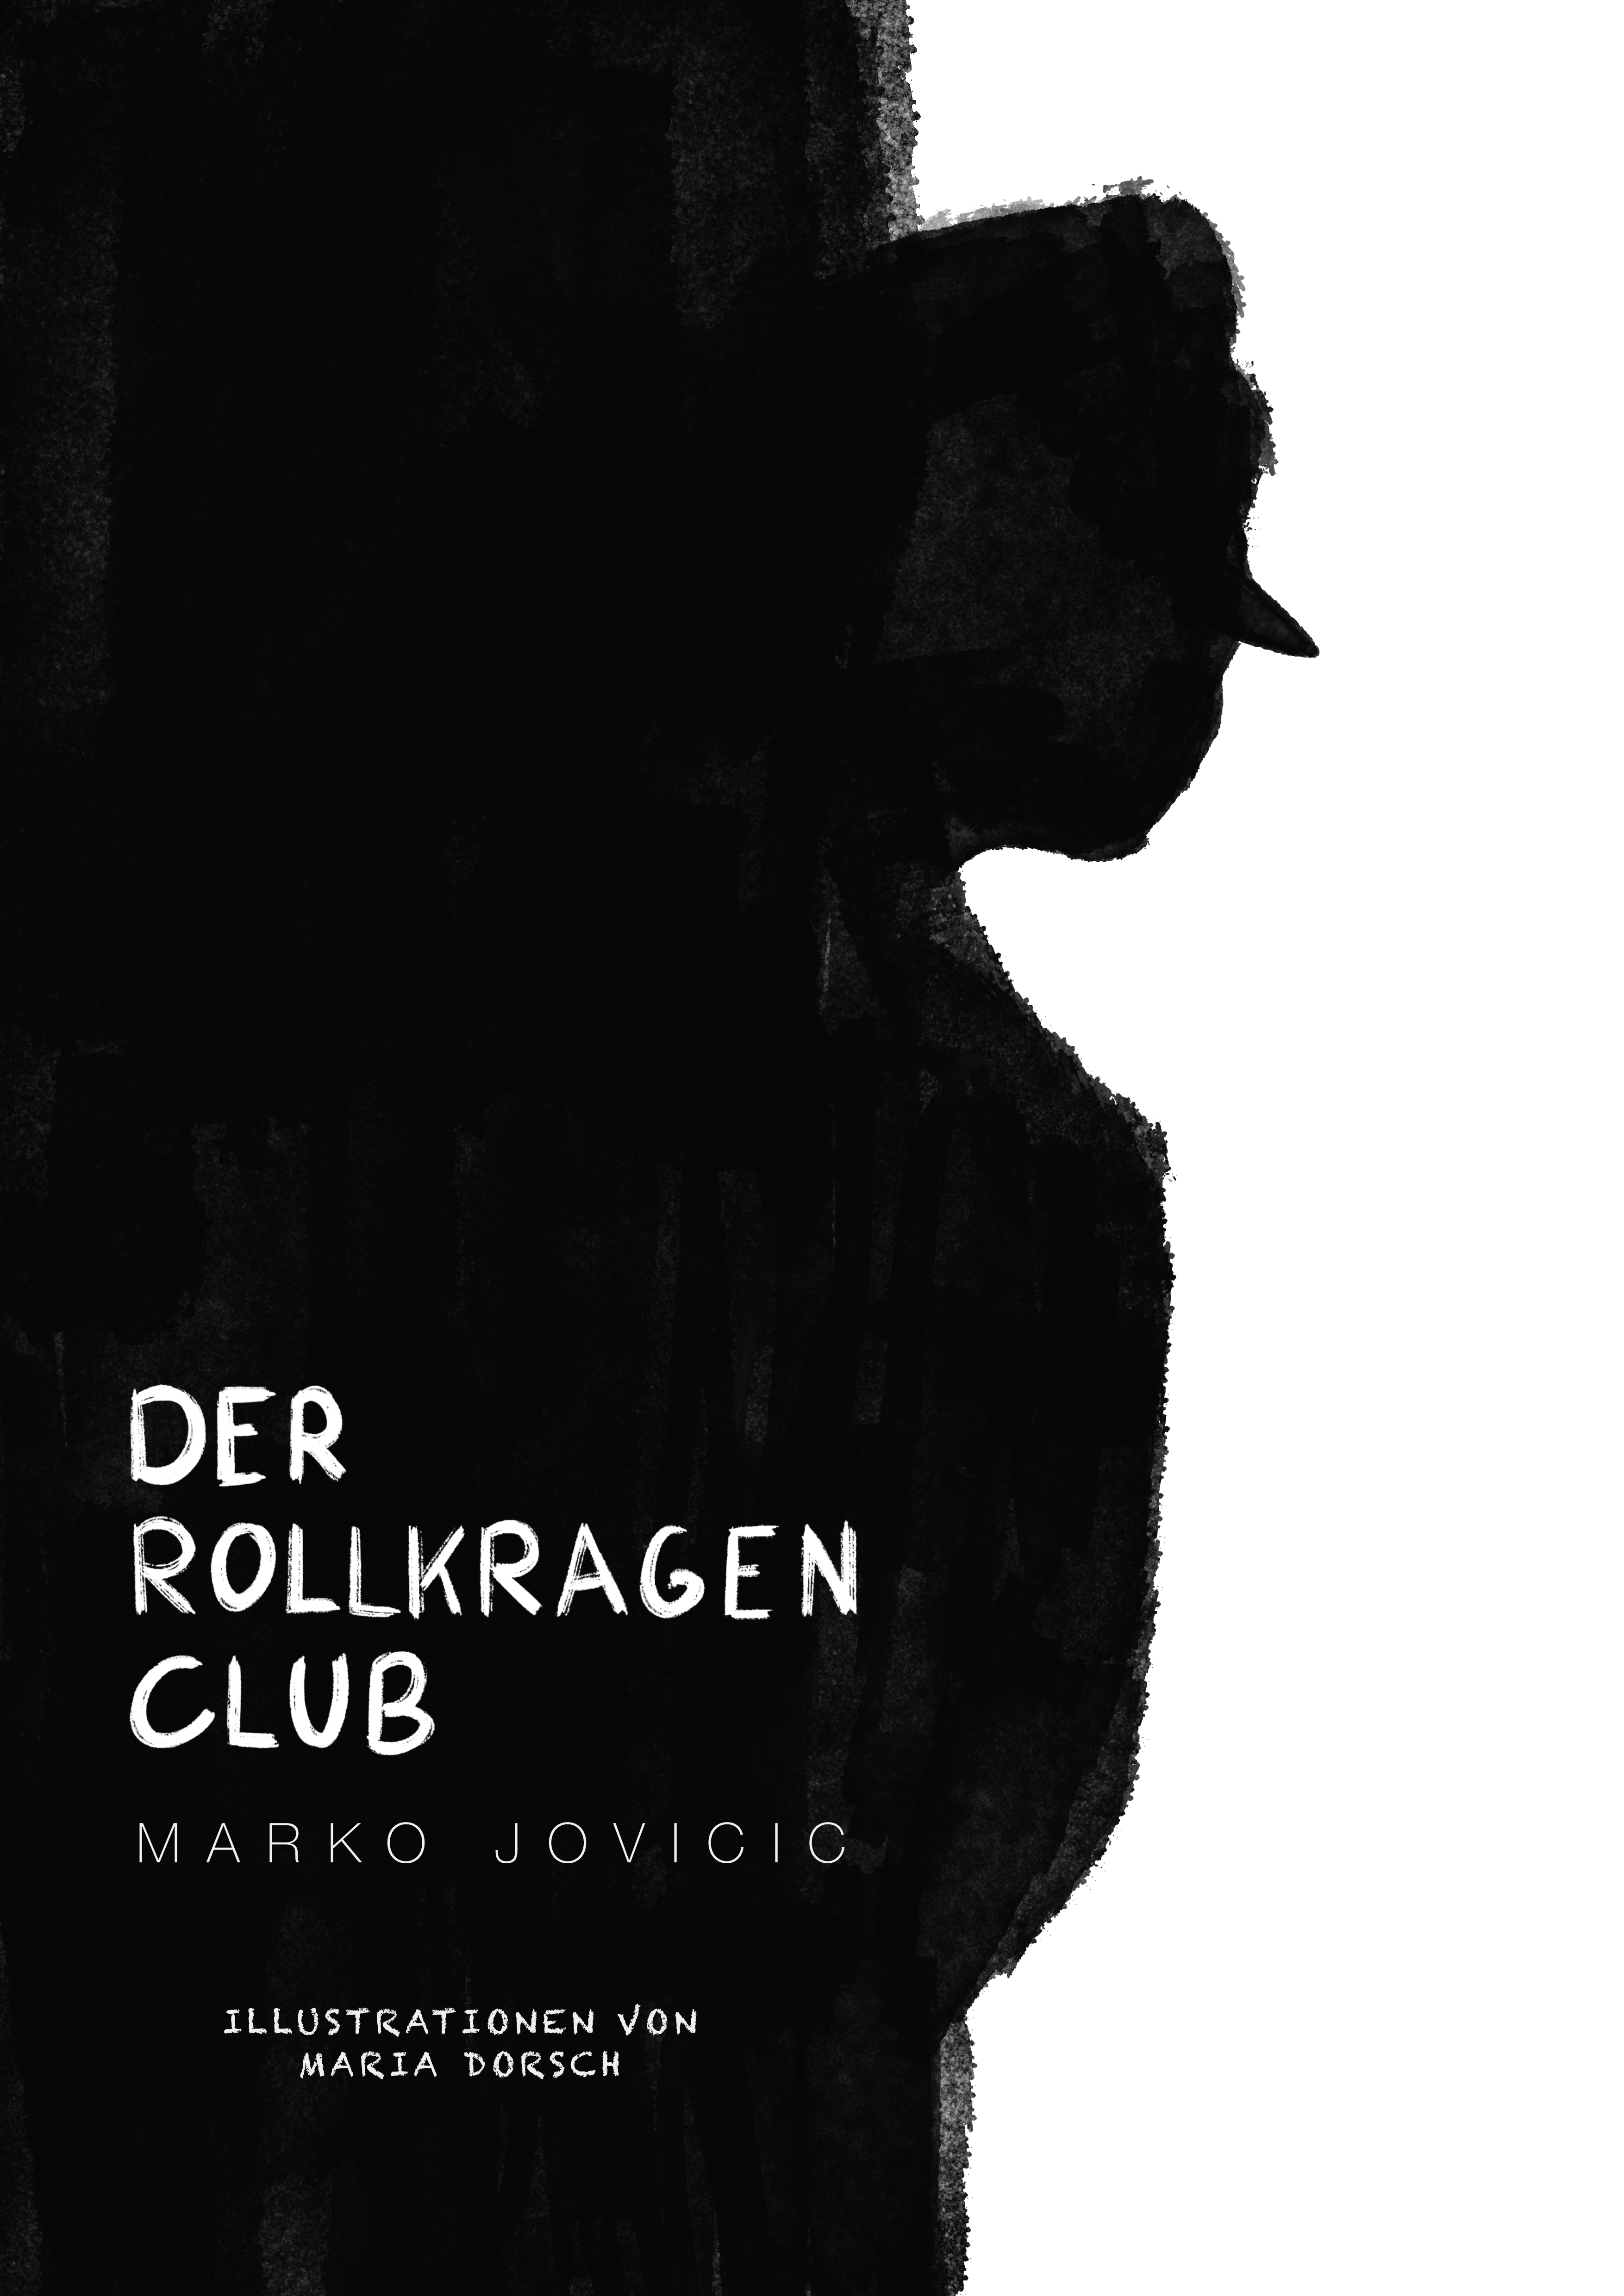 Der Rollkragenclub Profilbild